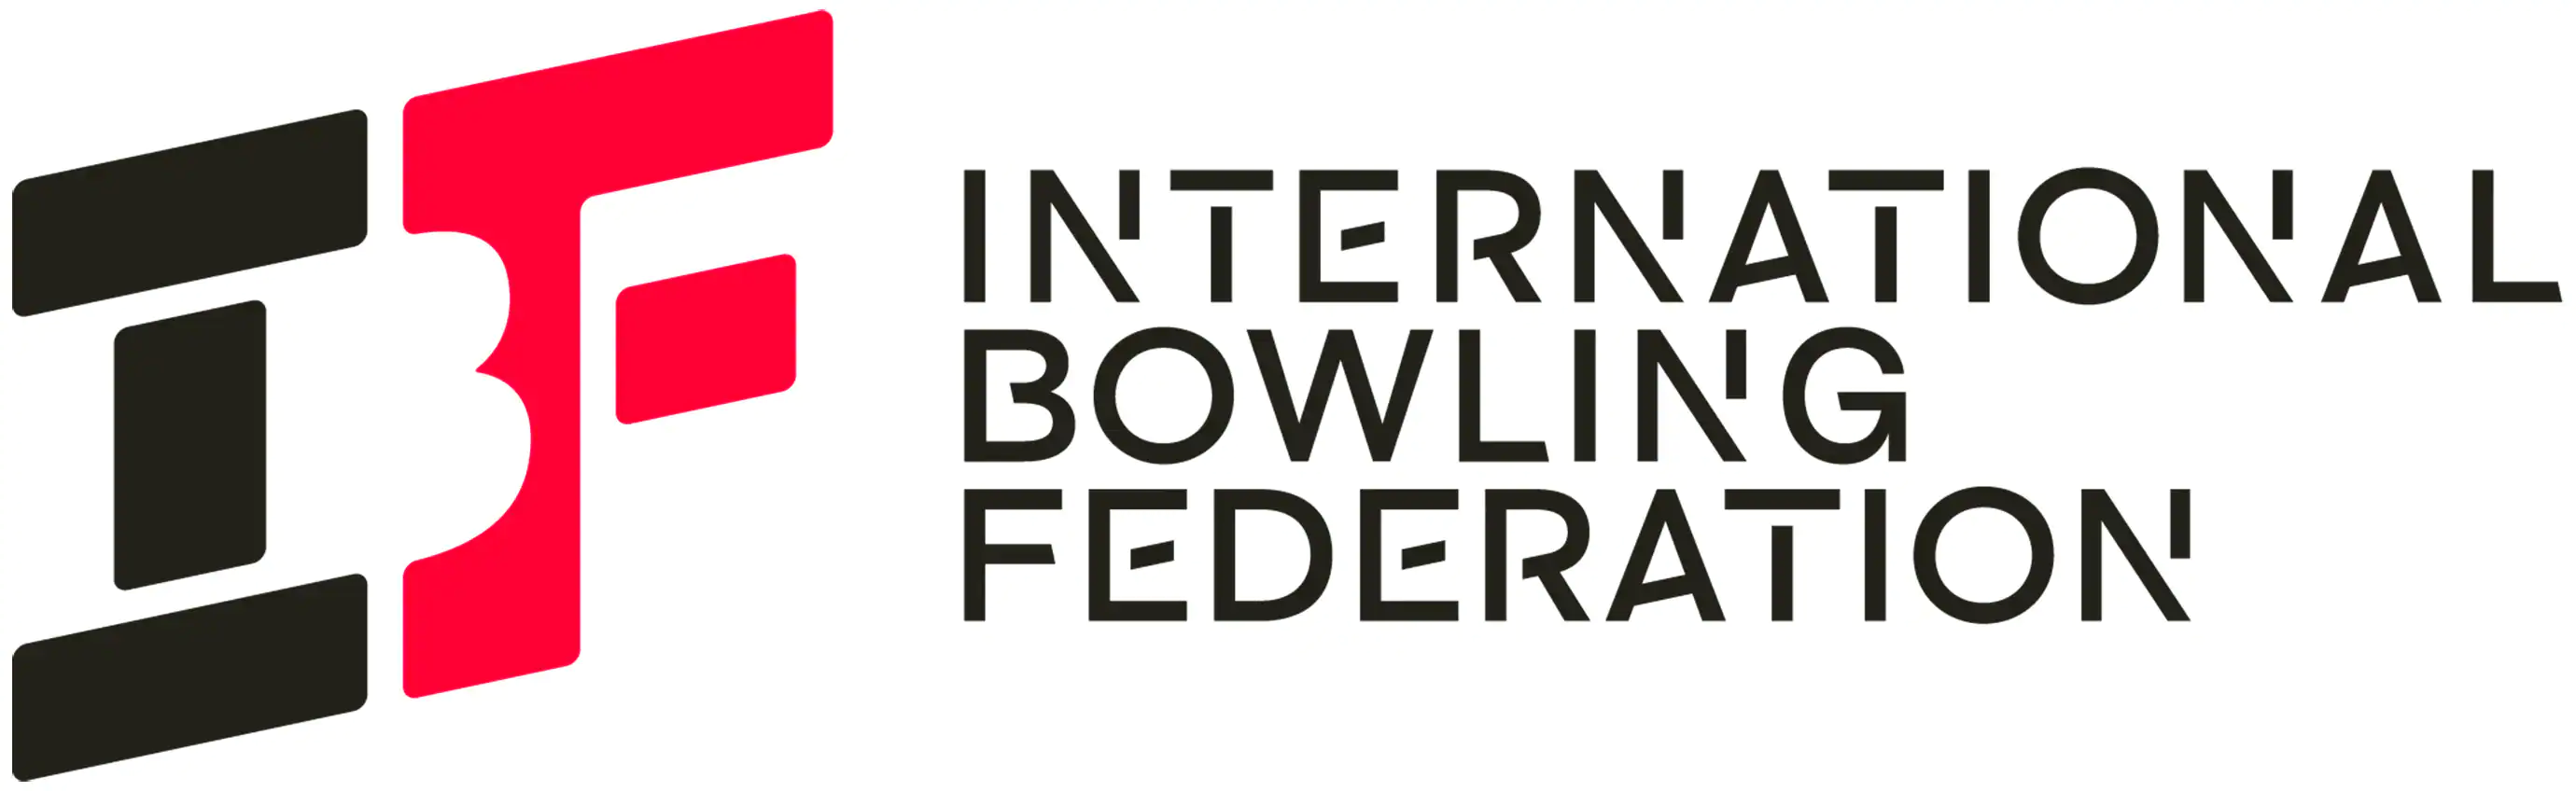 Logo IBF